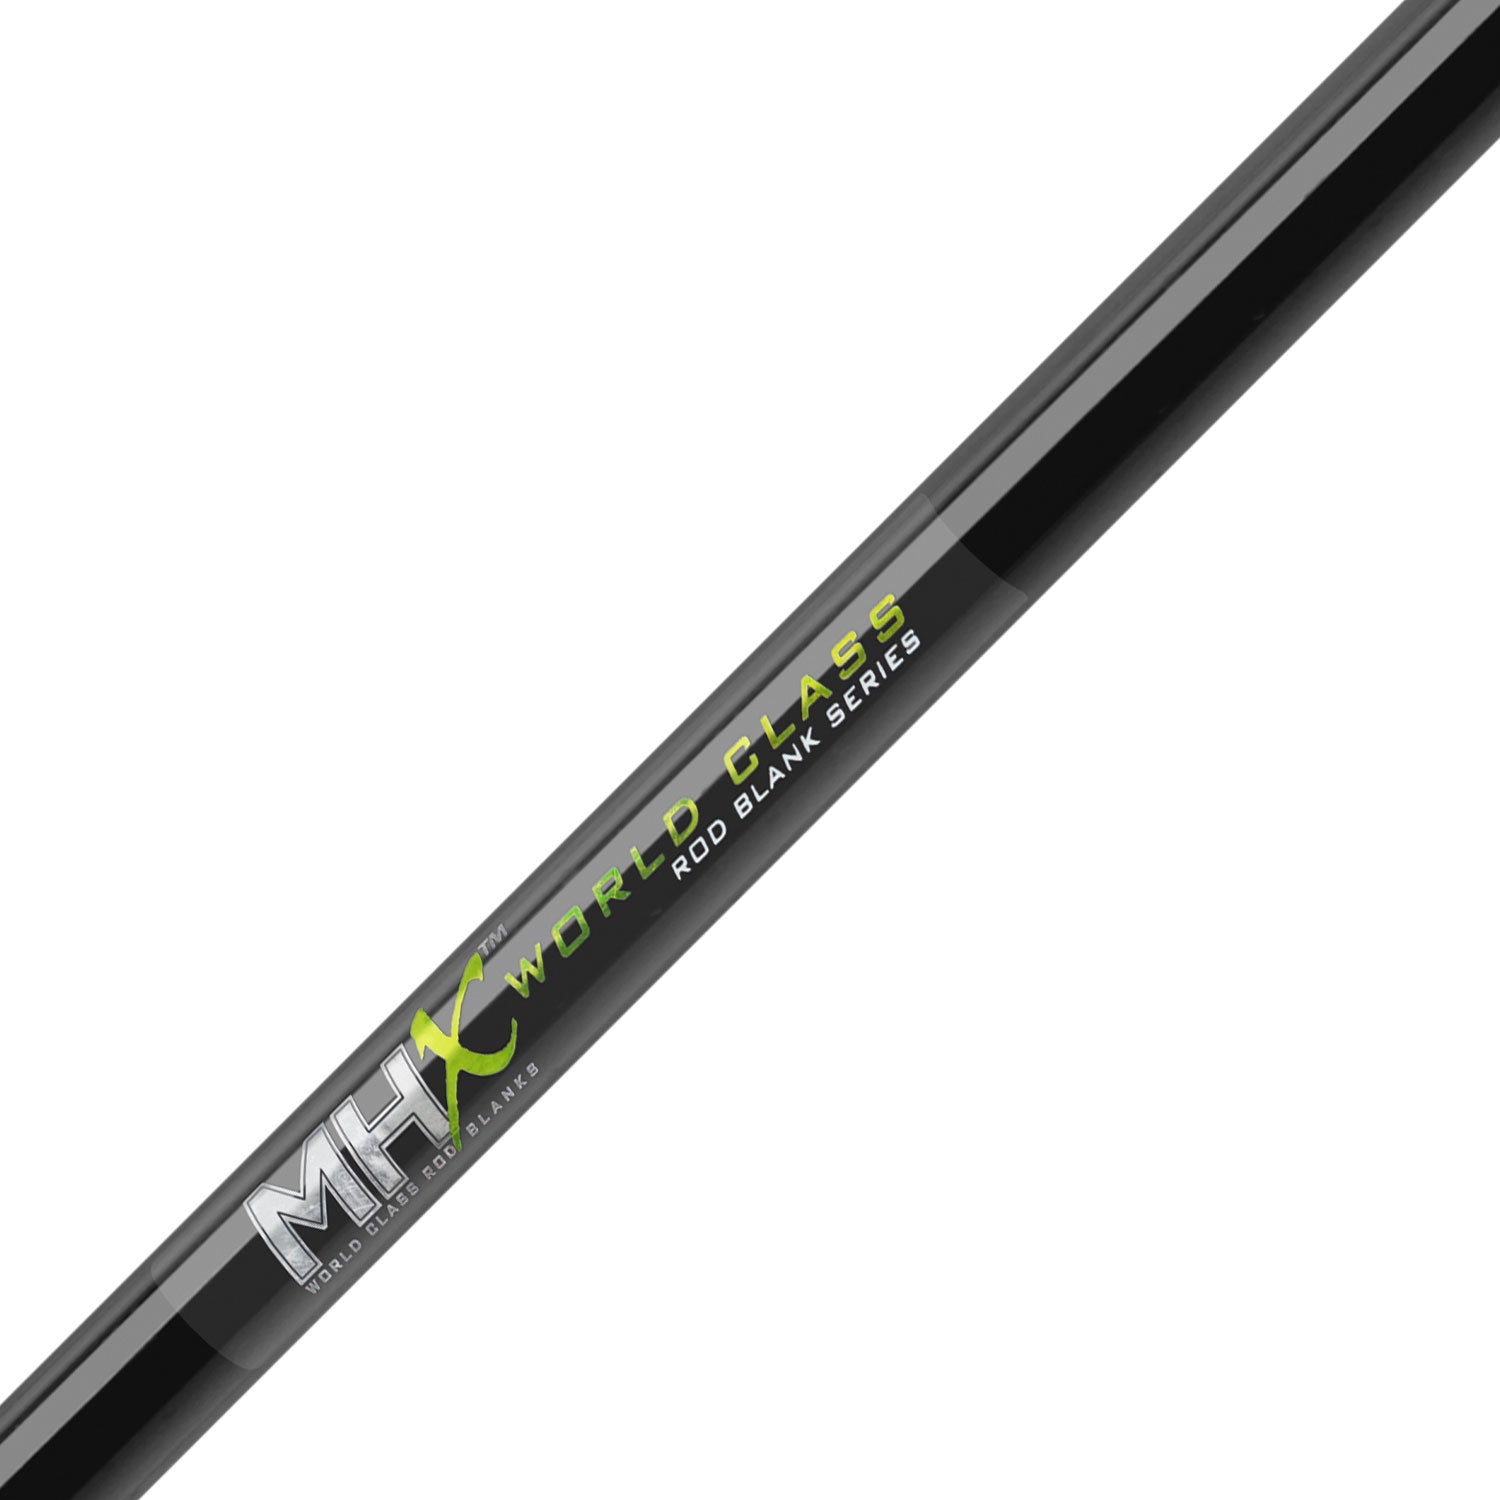 MHX 8'0" Med-Heavy Musky & Saltwater Rod Blank - MU96MH-MHX